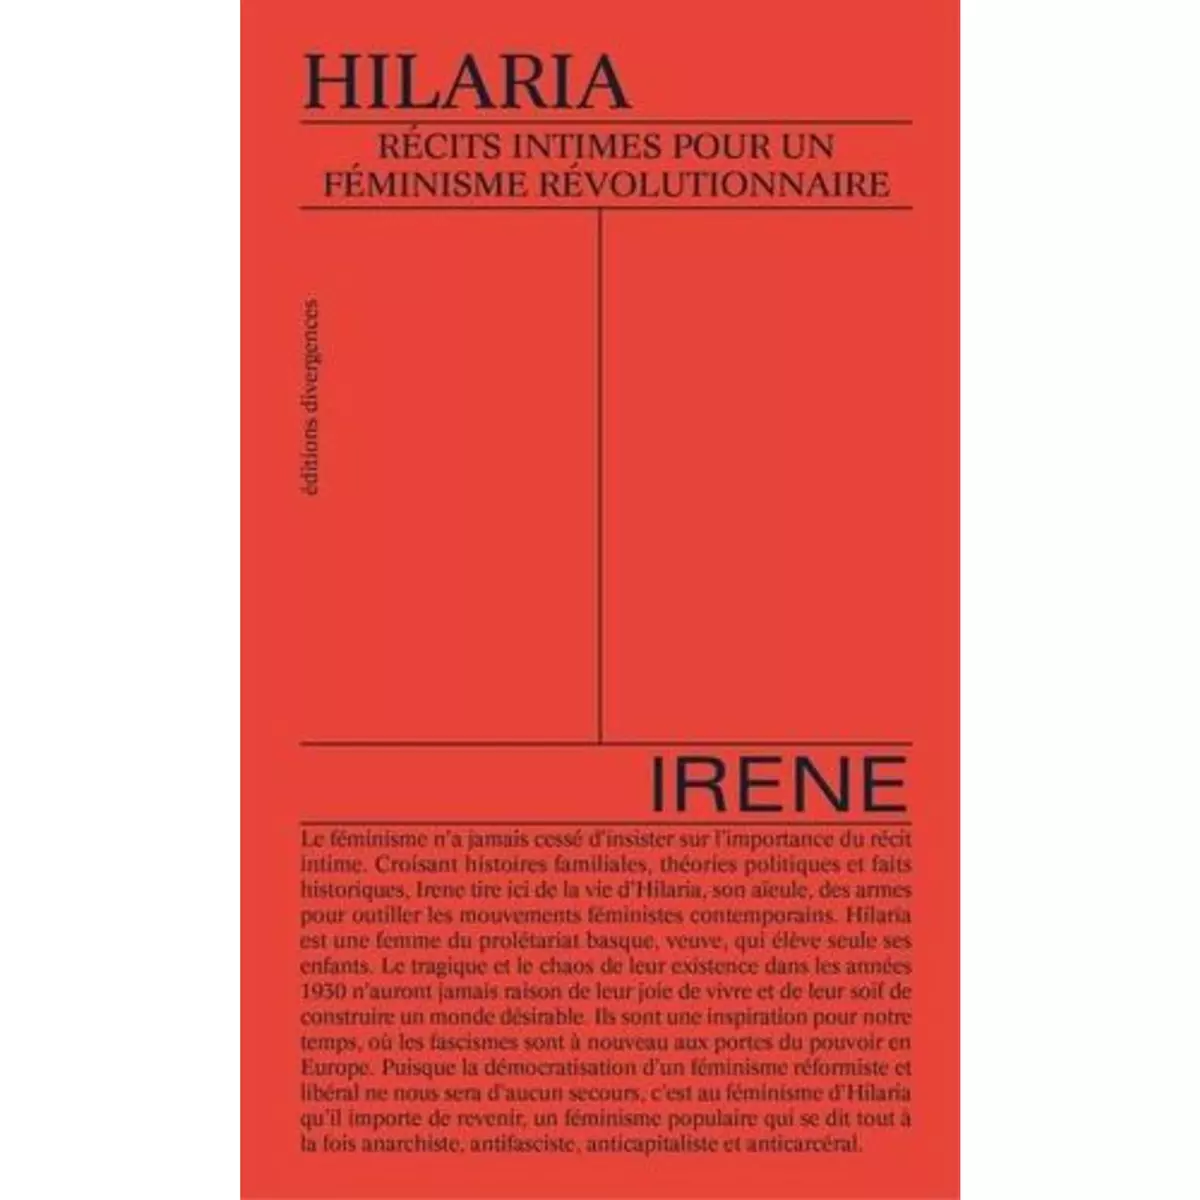  HILARIA. RECITS INTIMES POUR UN FEMINISME REVOLUTIONNAIRE, Irene